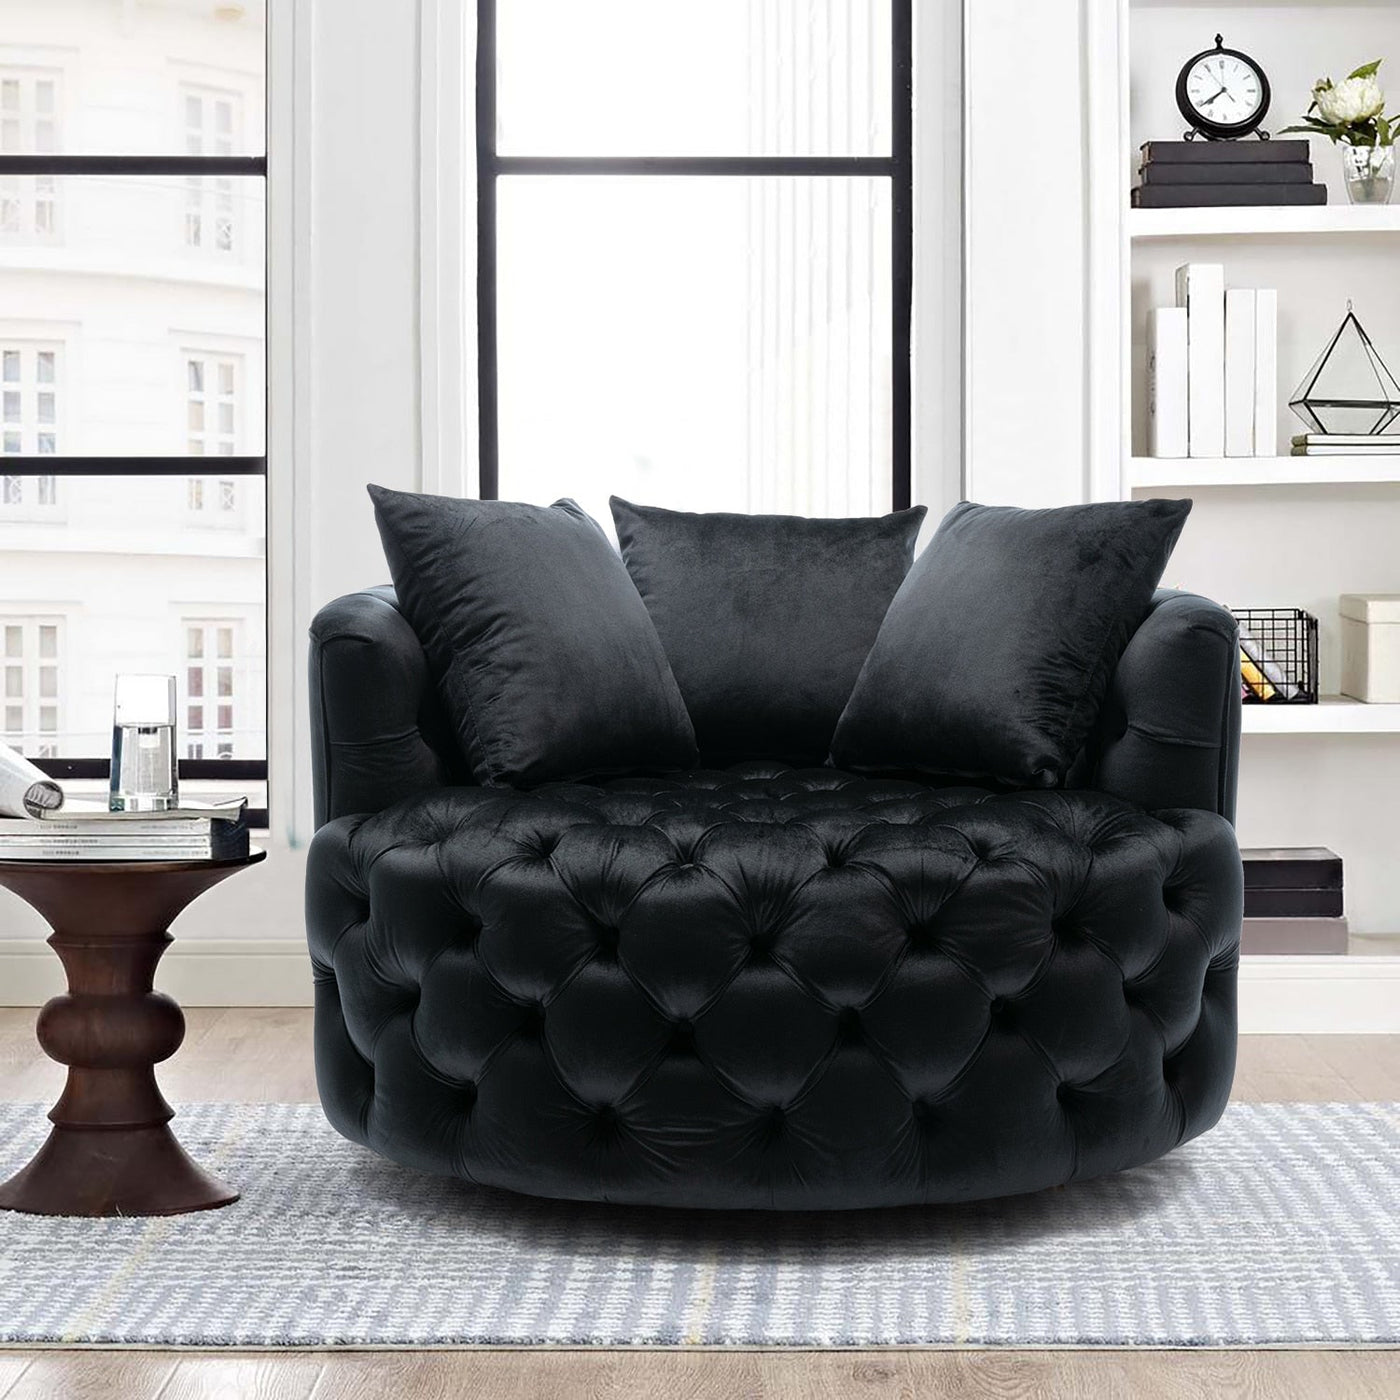 Homio Decor Living Room Velvet / Black Luxury Button Tufted Round Leisure Chair